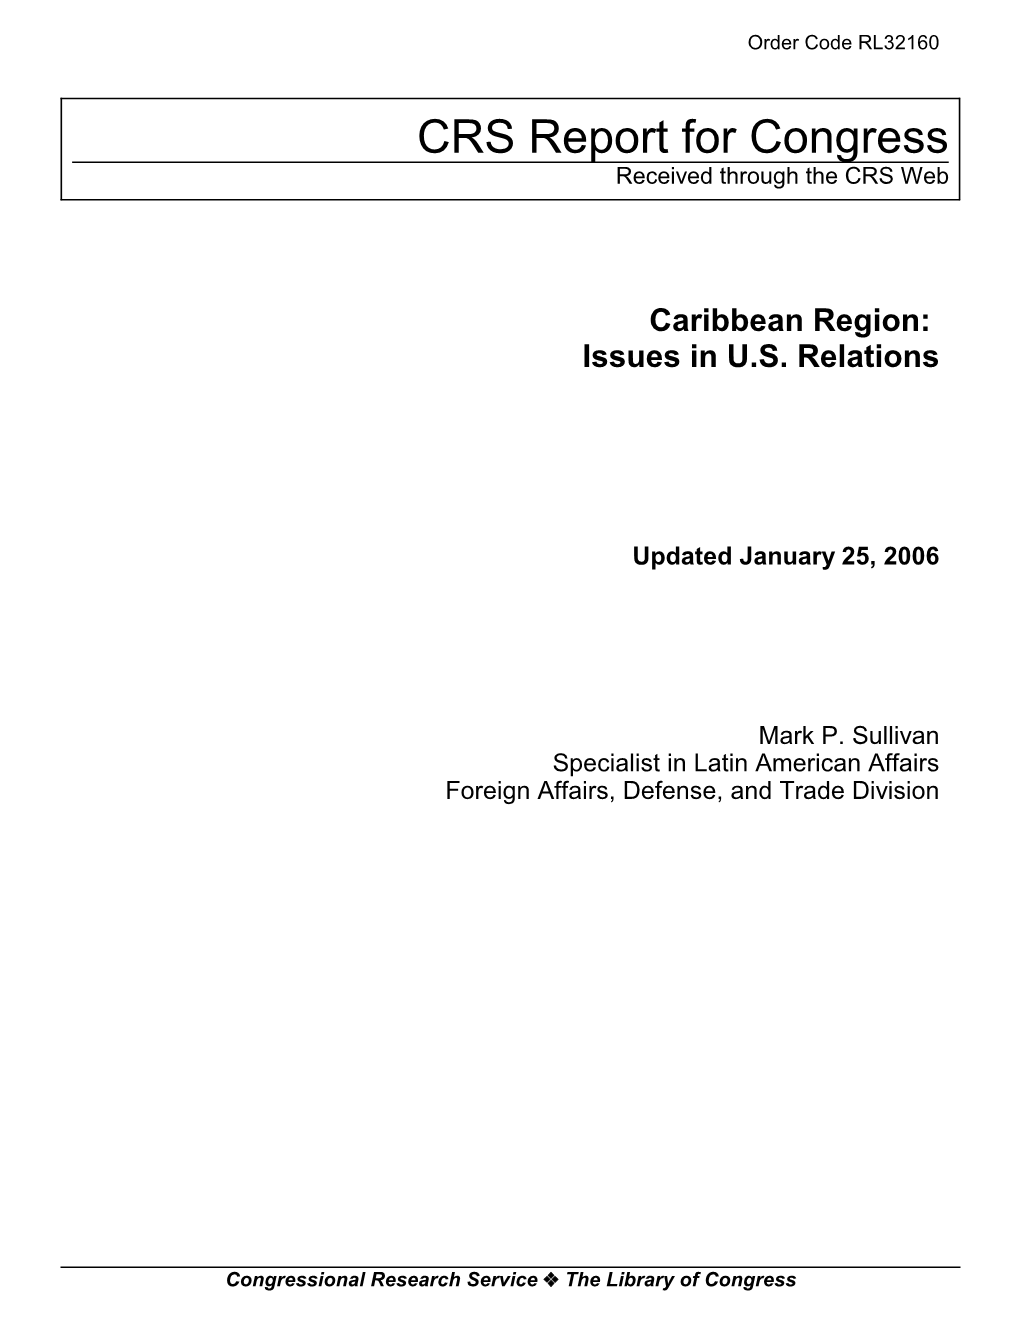 Caribbean Region: Issues in U.S